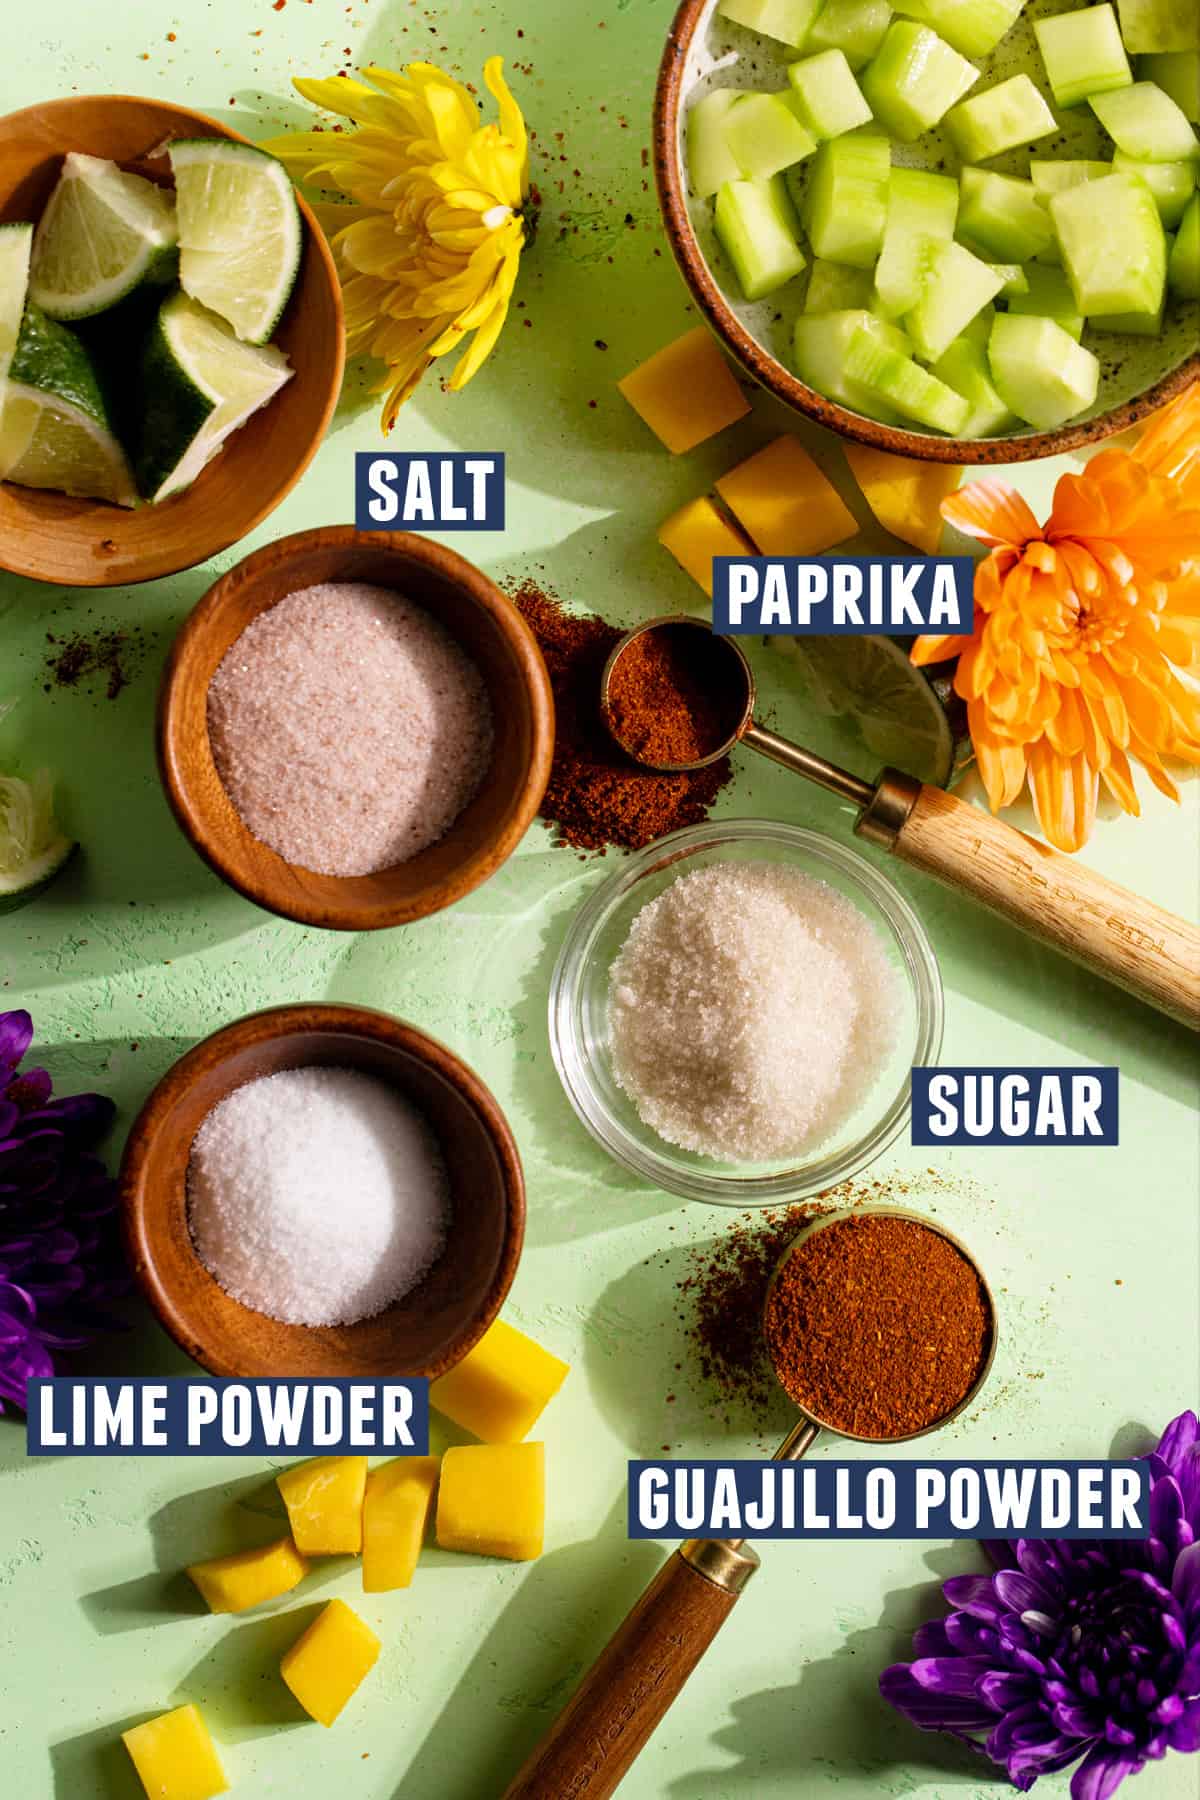 Ingredients needed to make homemade chili lime seasoning.